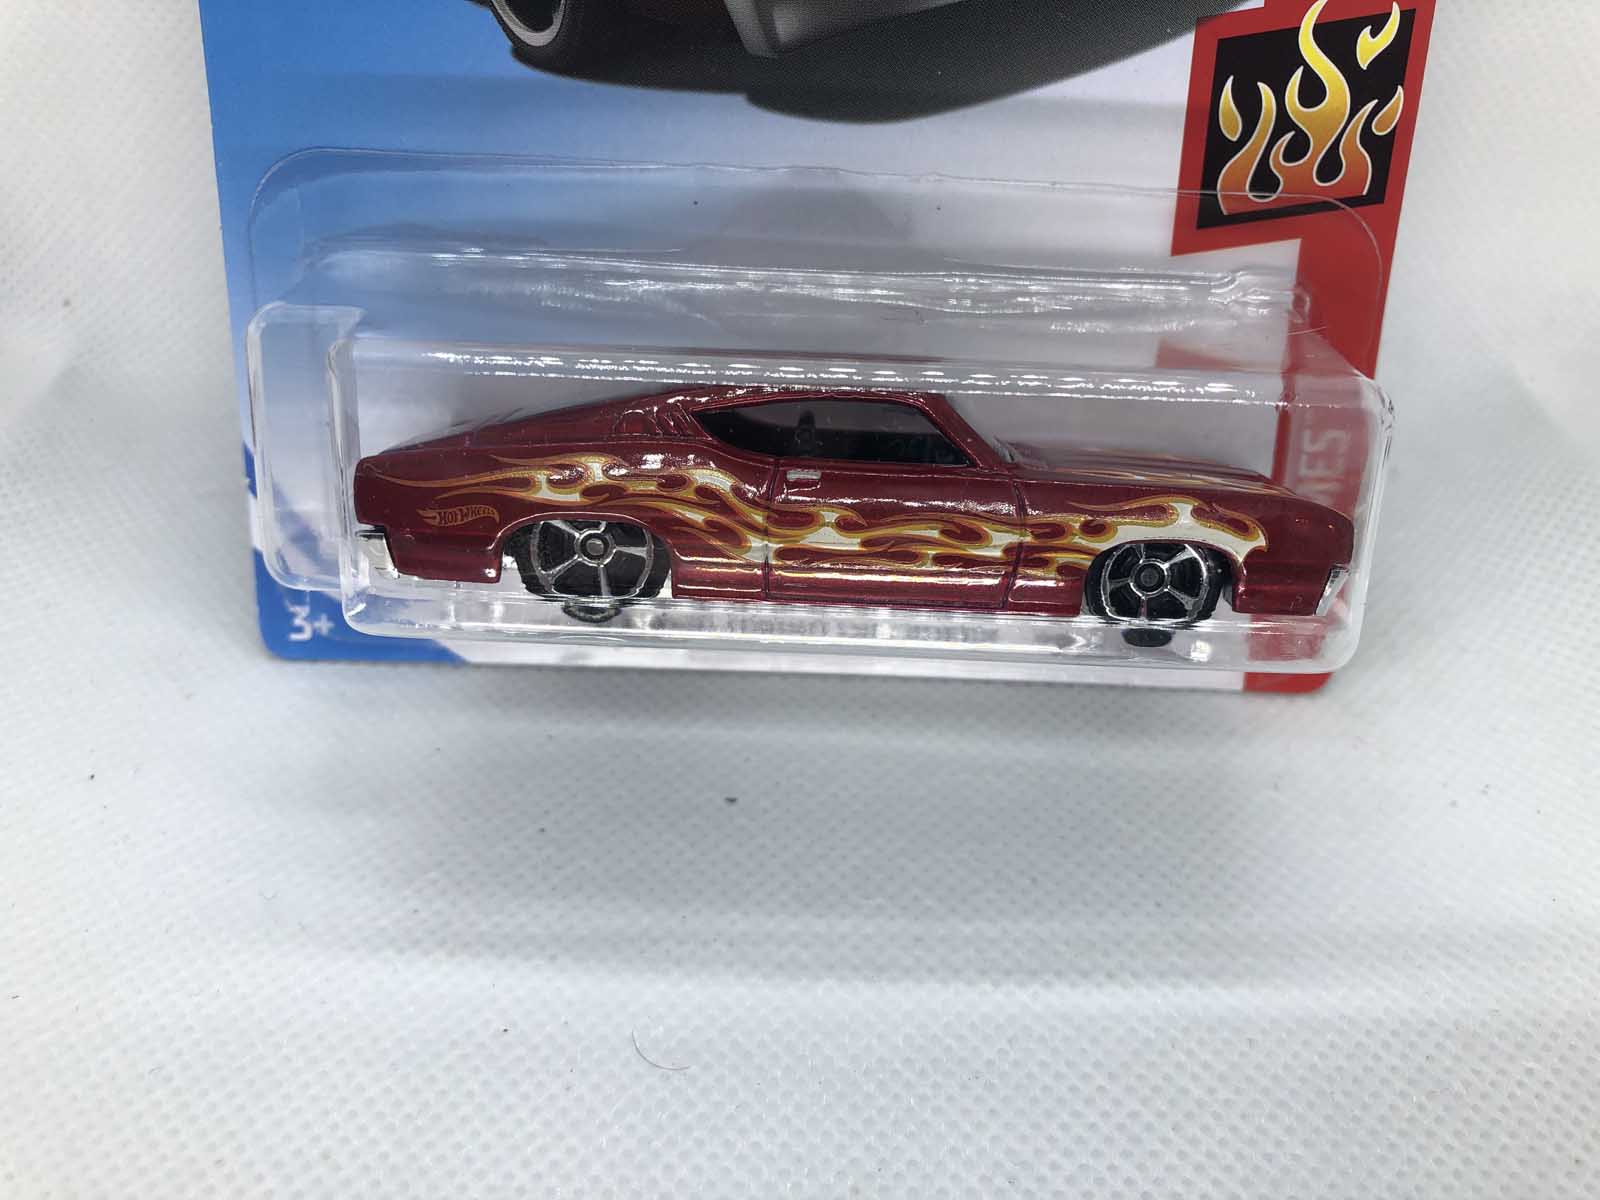  69 Ford Torino Talladega